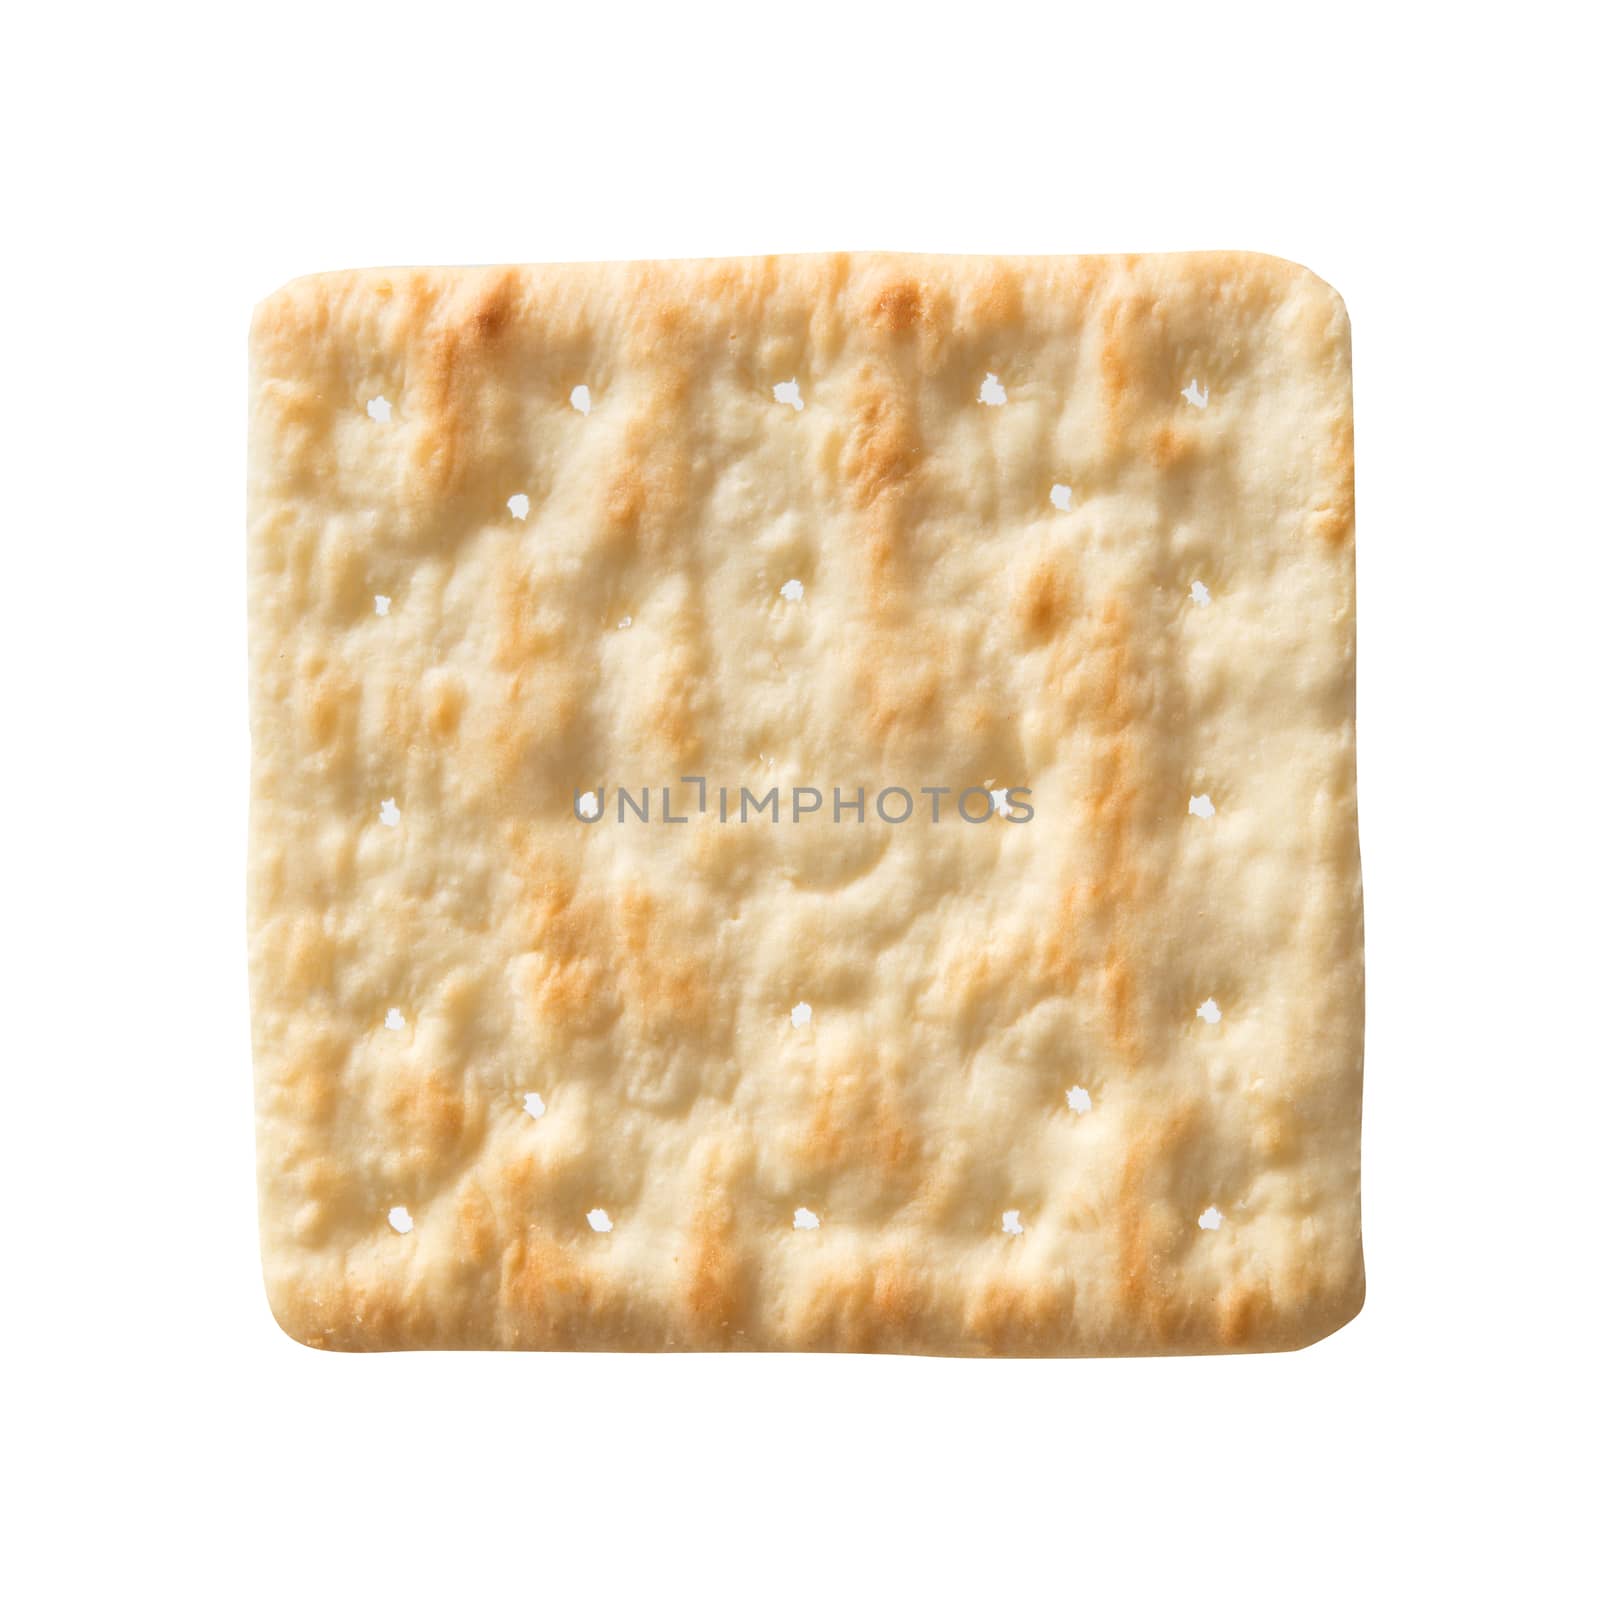 Square soda cracker by szefei